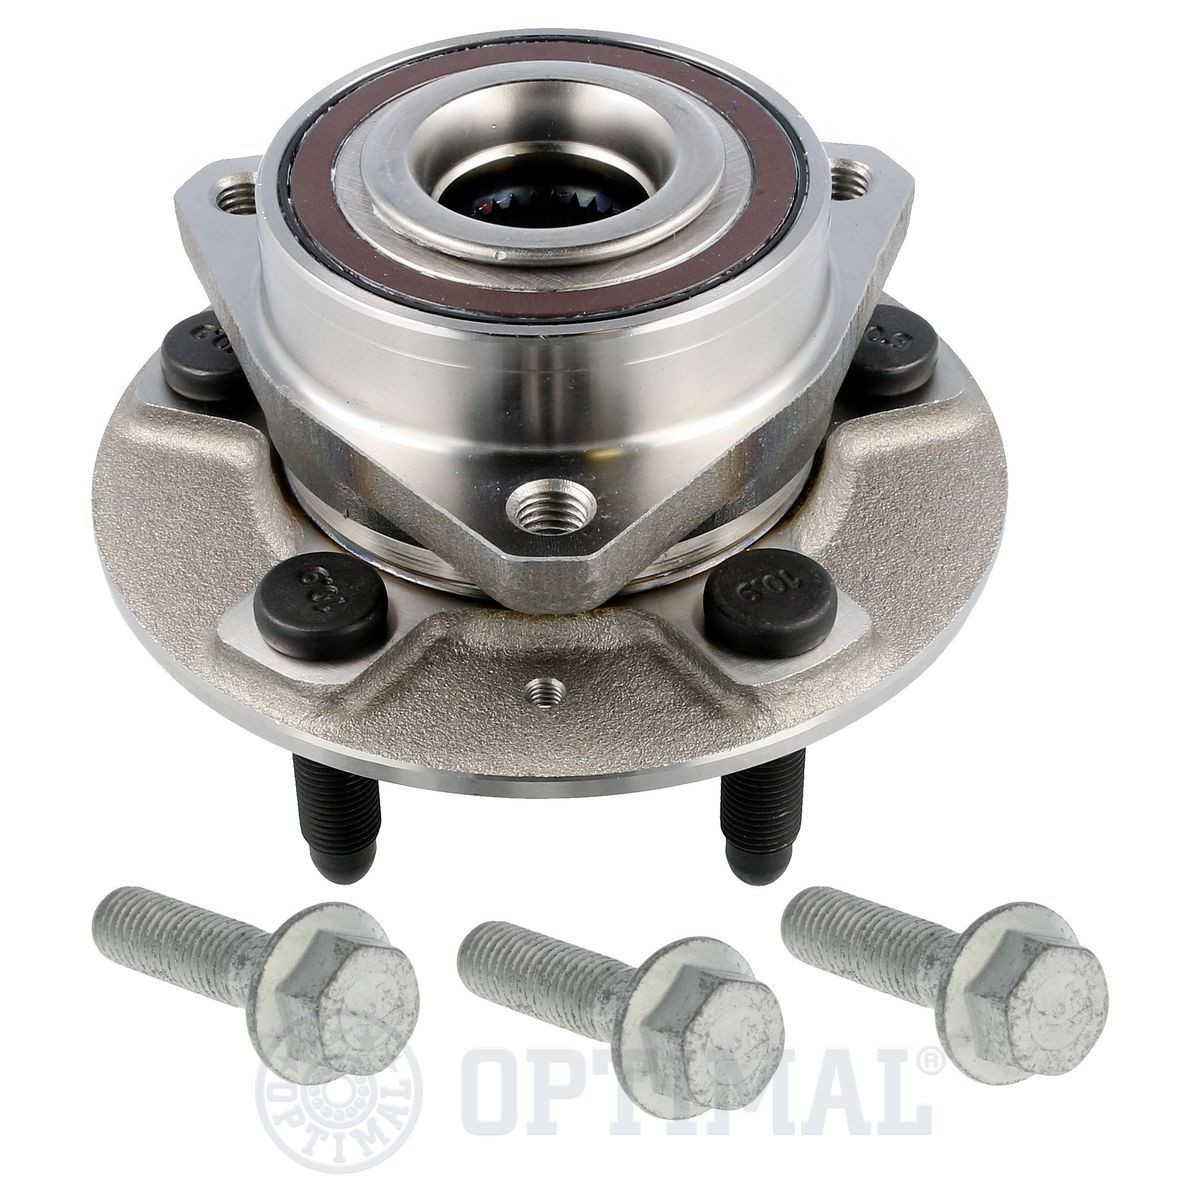 OPTIMAL 202300 Wheel bearing kit with integrated magnetic sensor ring, 157, 91,2 mm